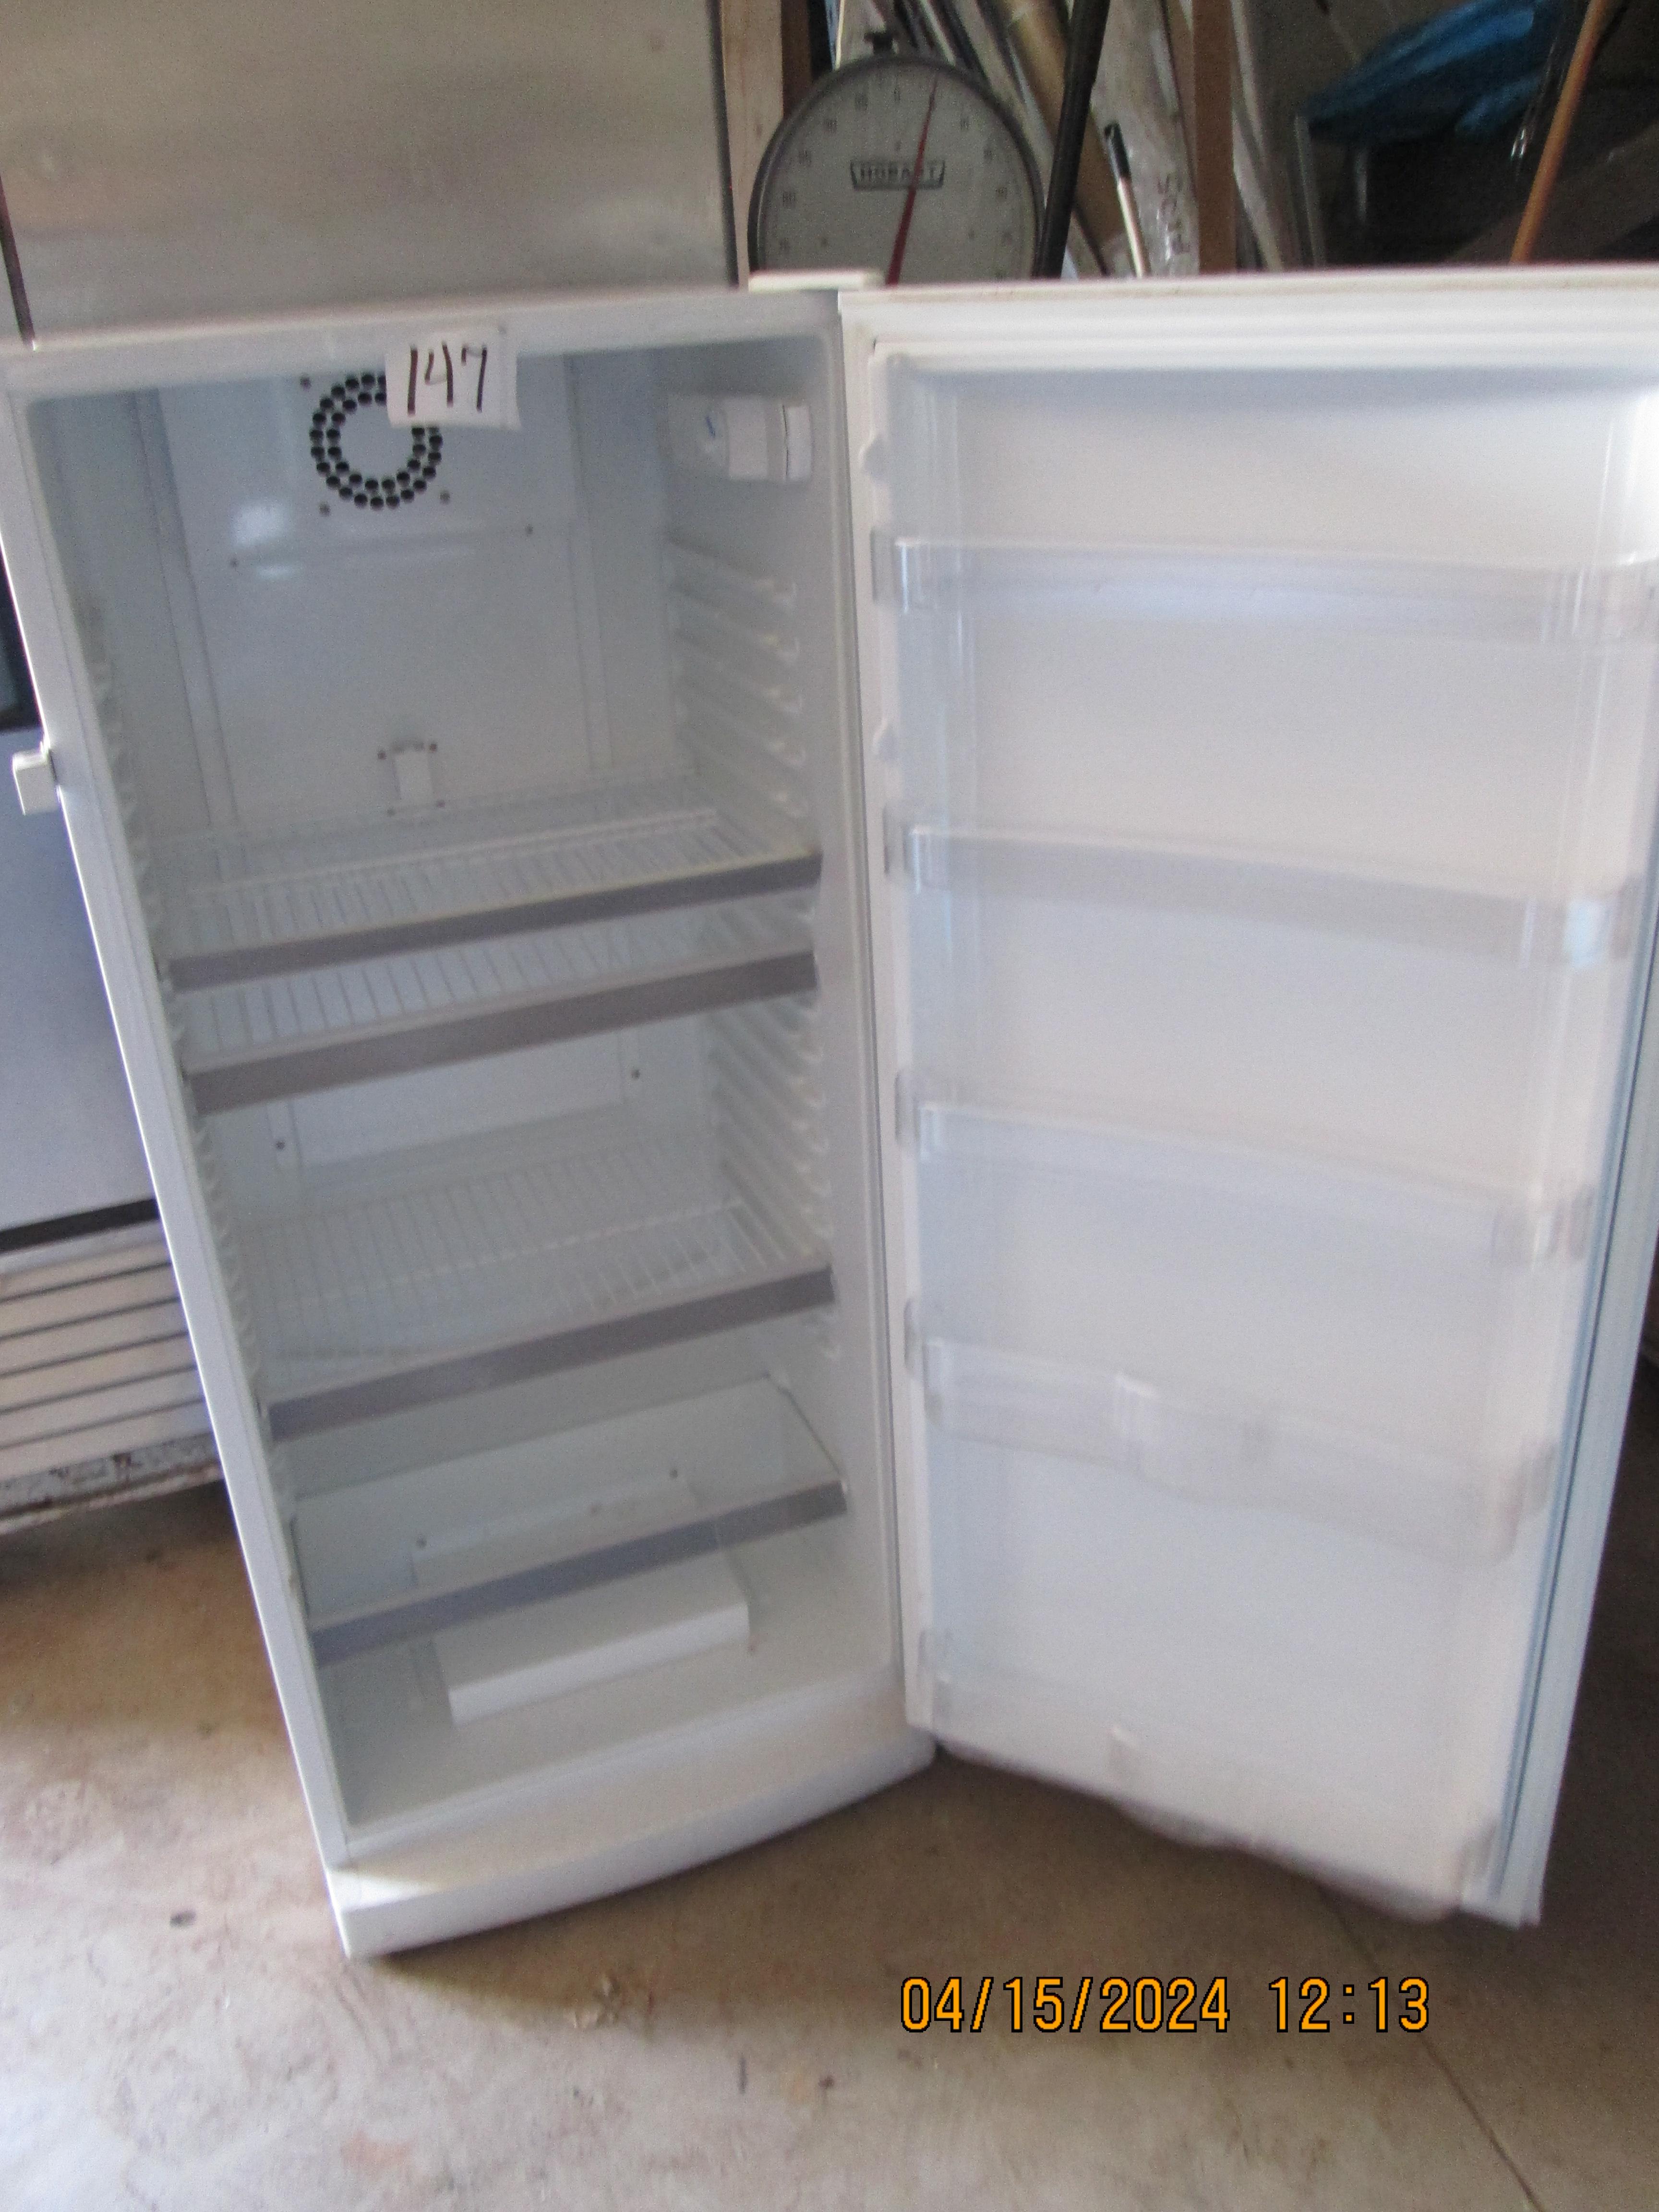 Accucold Medical Refrigerator